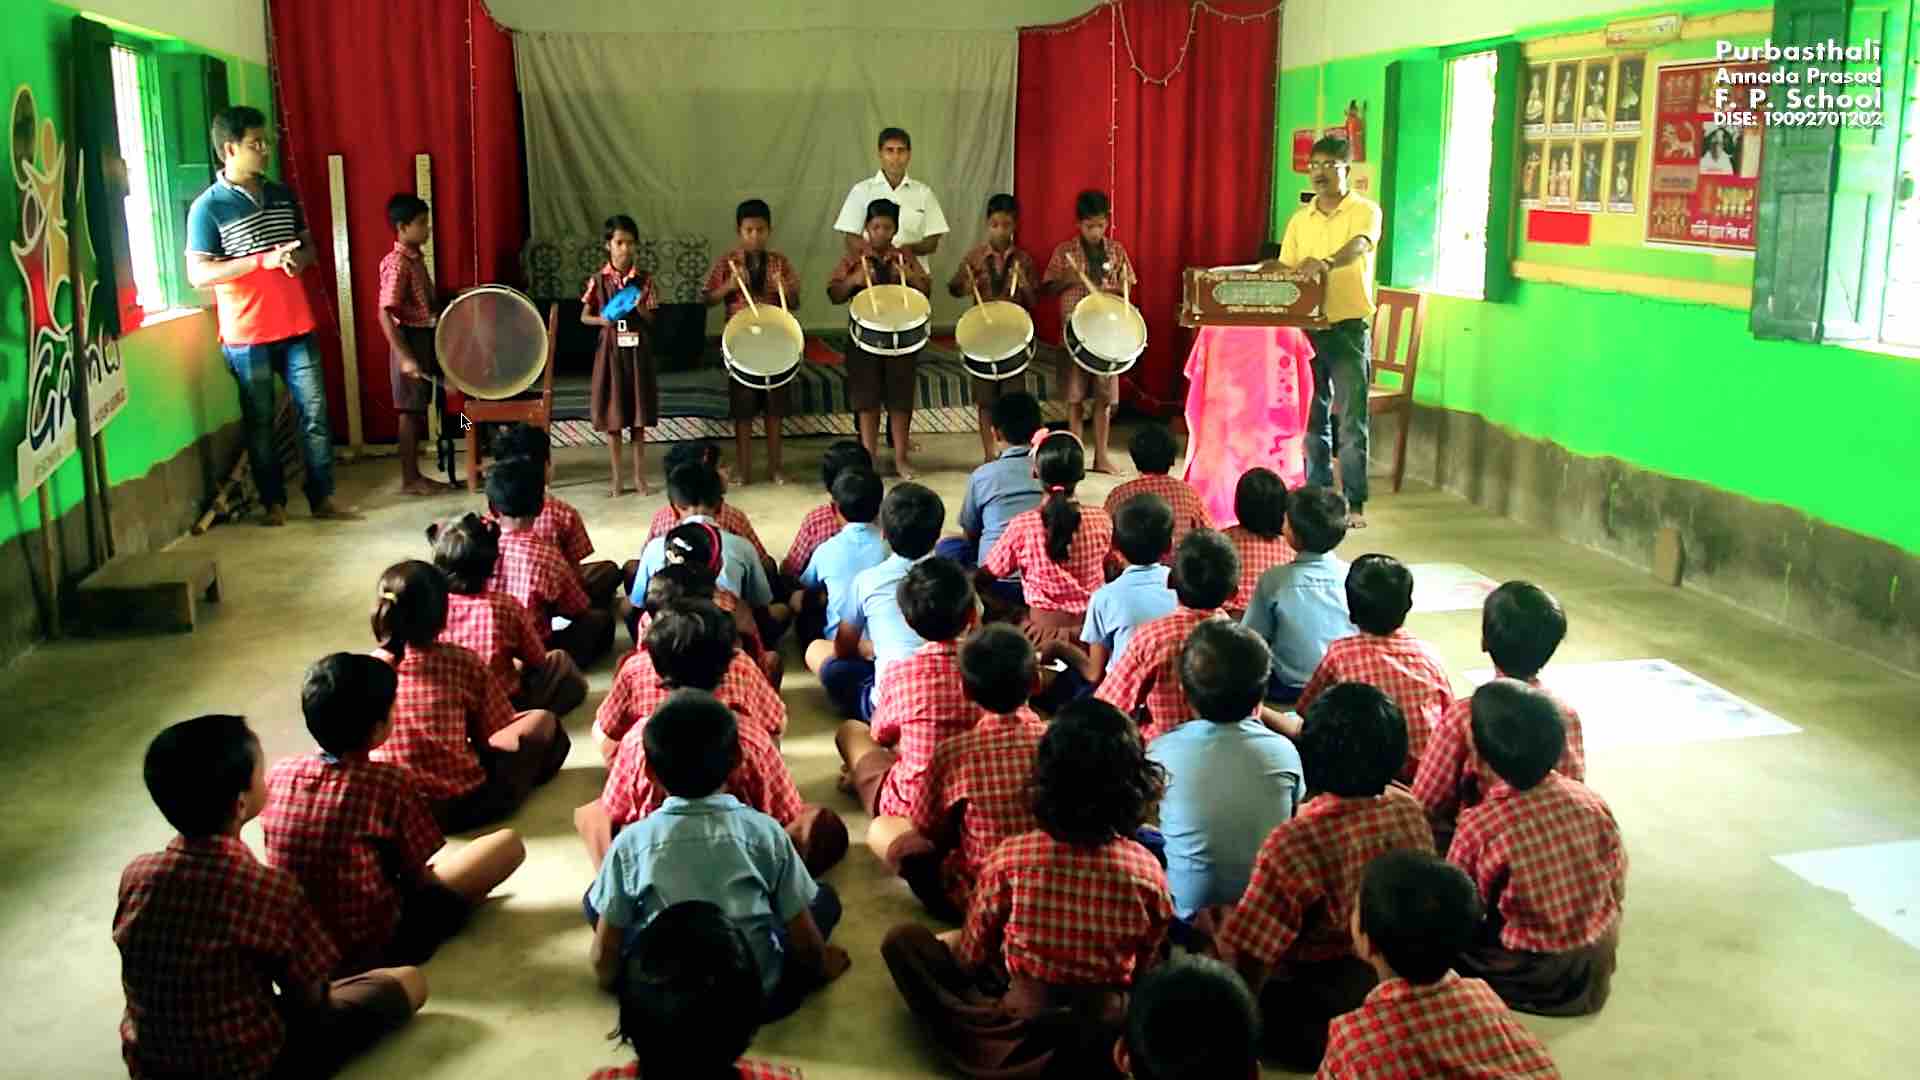 Annada prasad fp - school - purbasthali - award winning - documentary